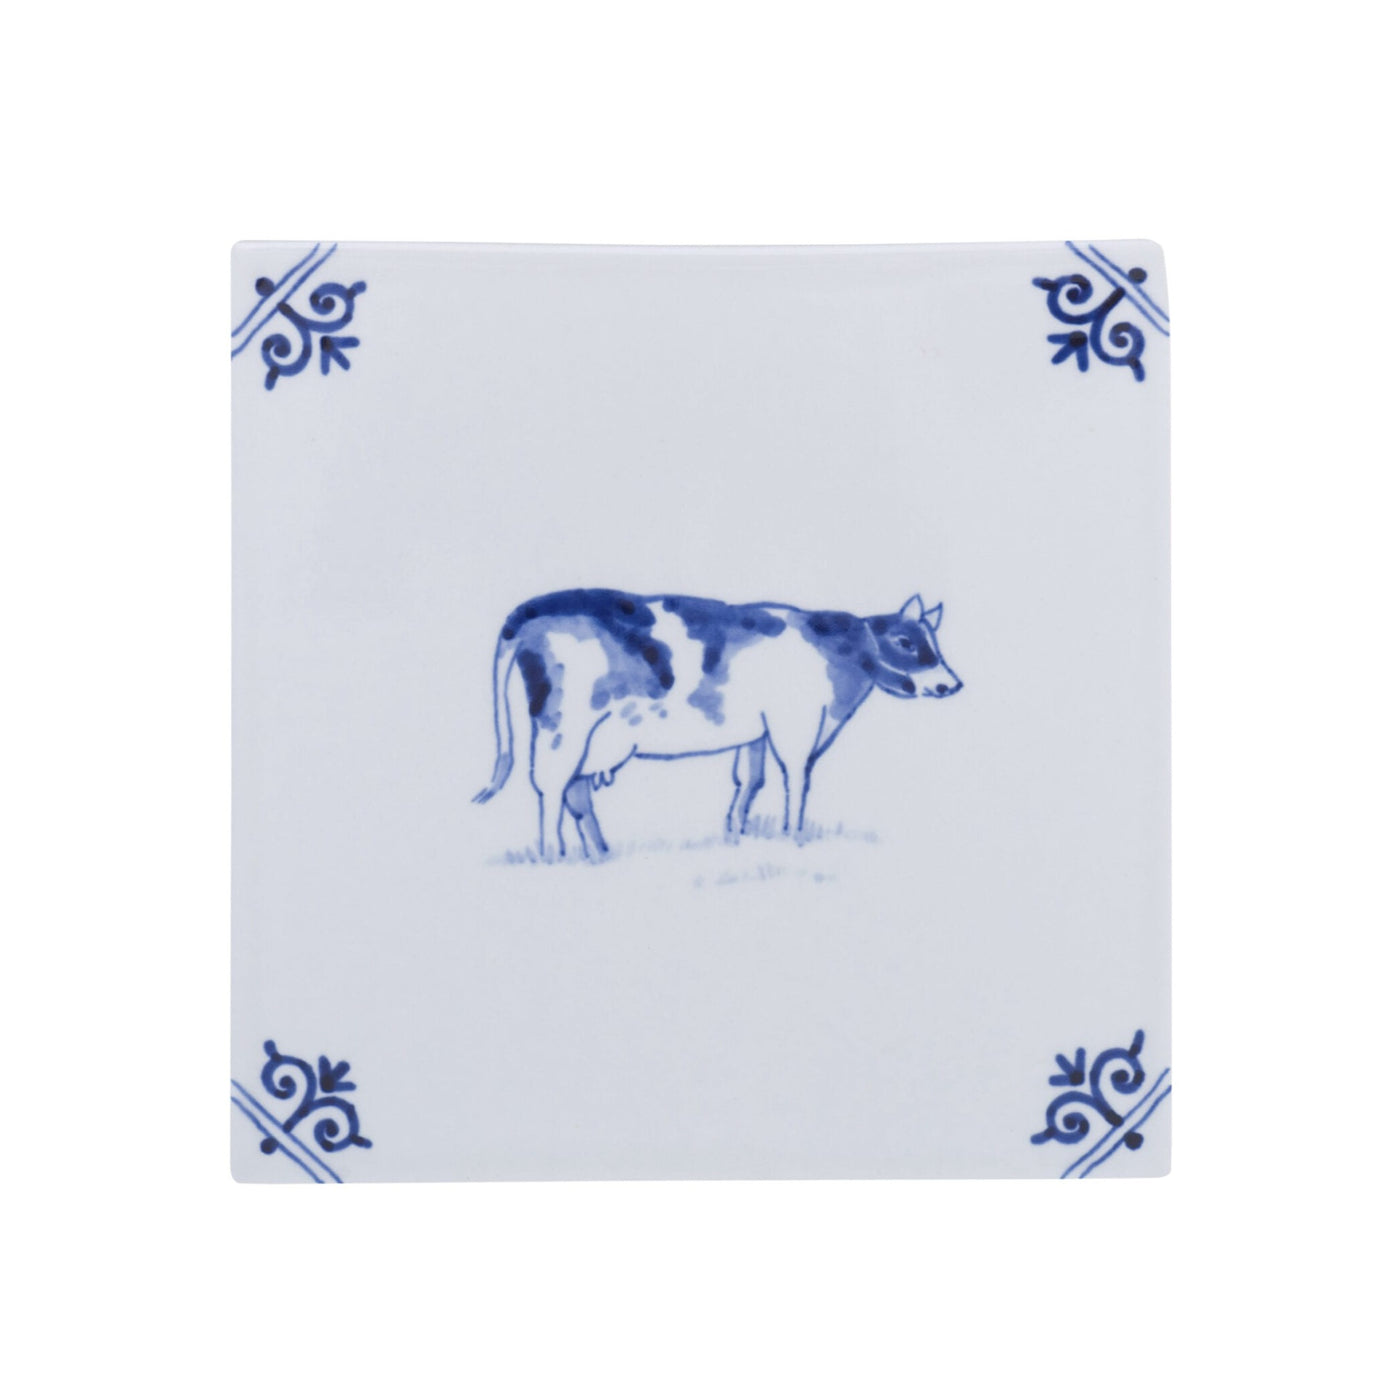 Delft Blue Tile Farm Cow Hand-Painted by Royal Delft